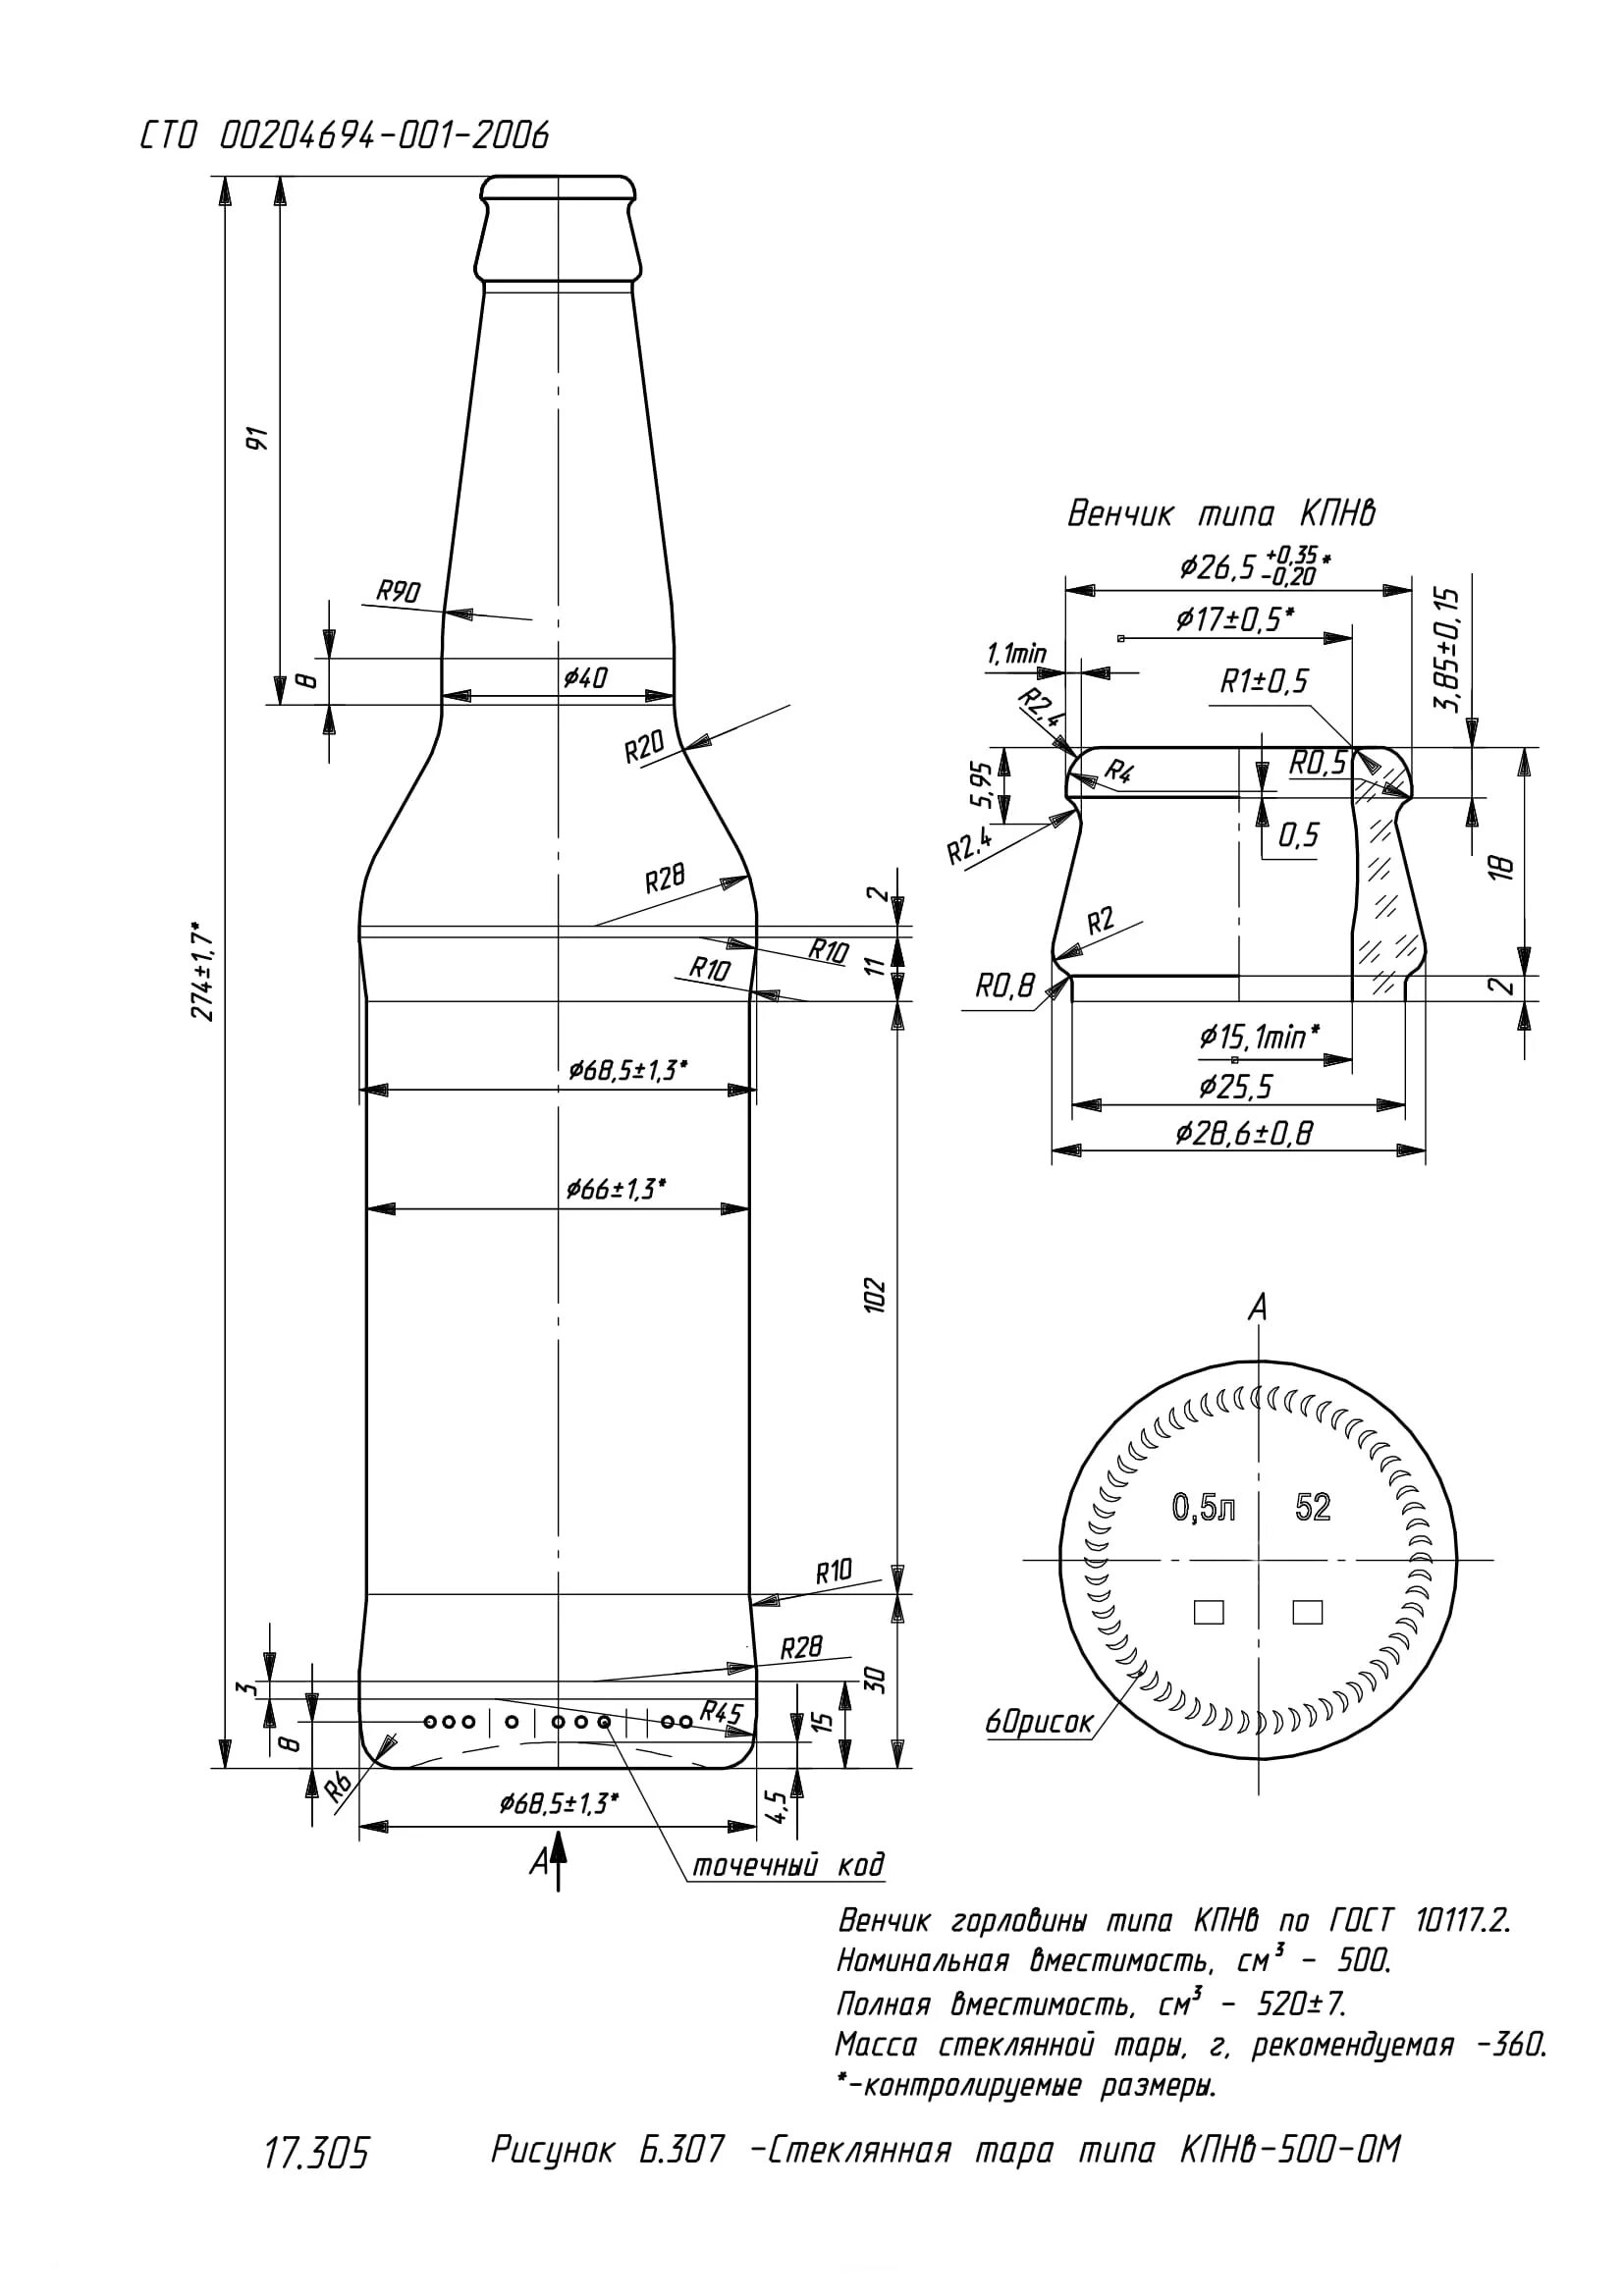 Диаметр пивной бутылки 0.5 ГОСТ. Диаметр пивной бутылки 0.5 стандарт. Размер бутылки 0.5